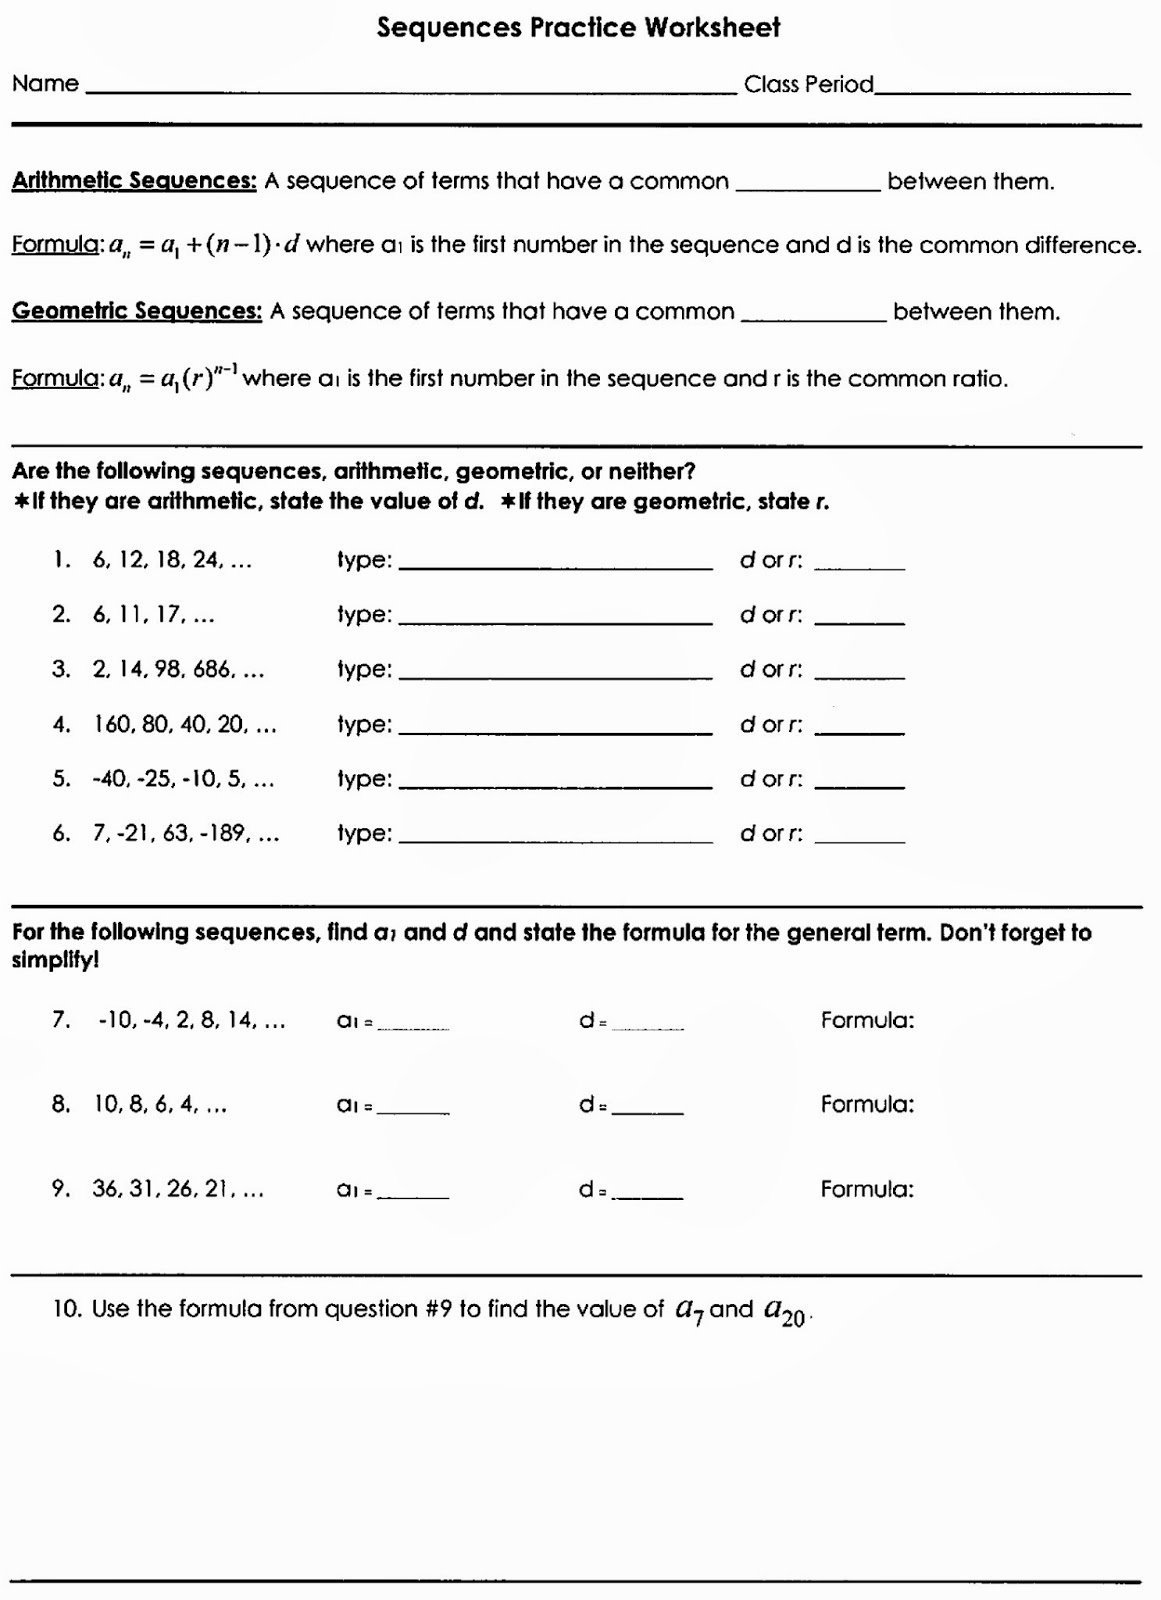 Geometric Sequence Practice Worksheet Beautiful Mr Matt S Math Classes assignment Sequences Practice